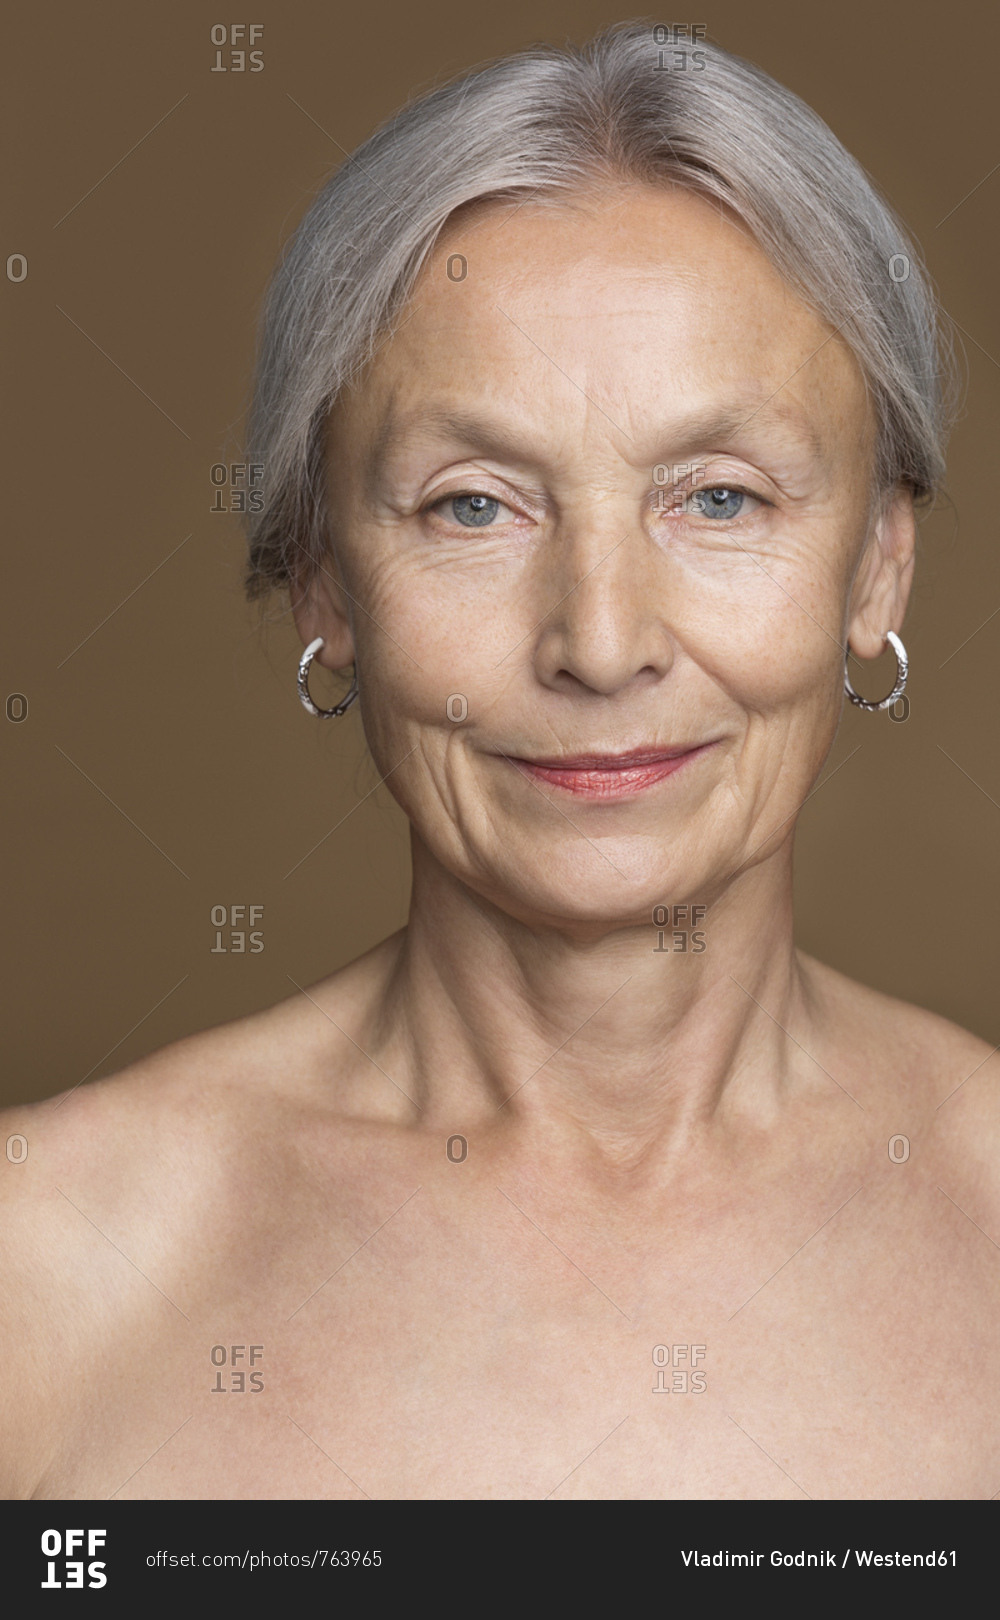 alan slater recommends Older Naturist Women